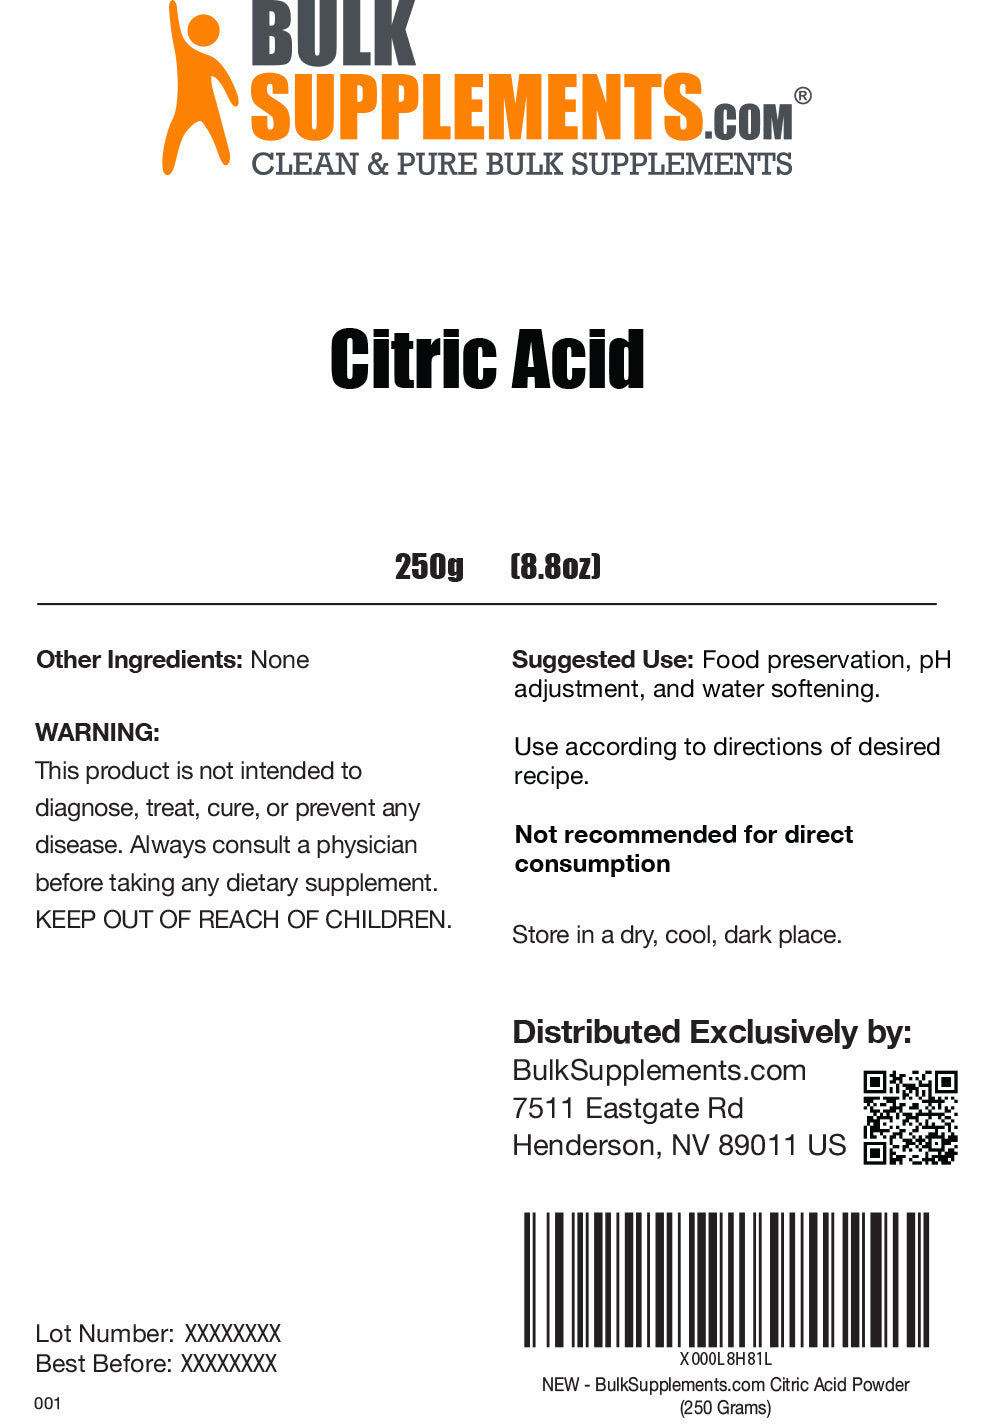 Citric Acid powder label 250g